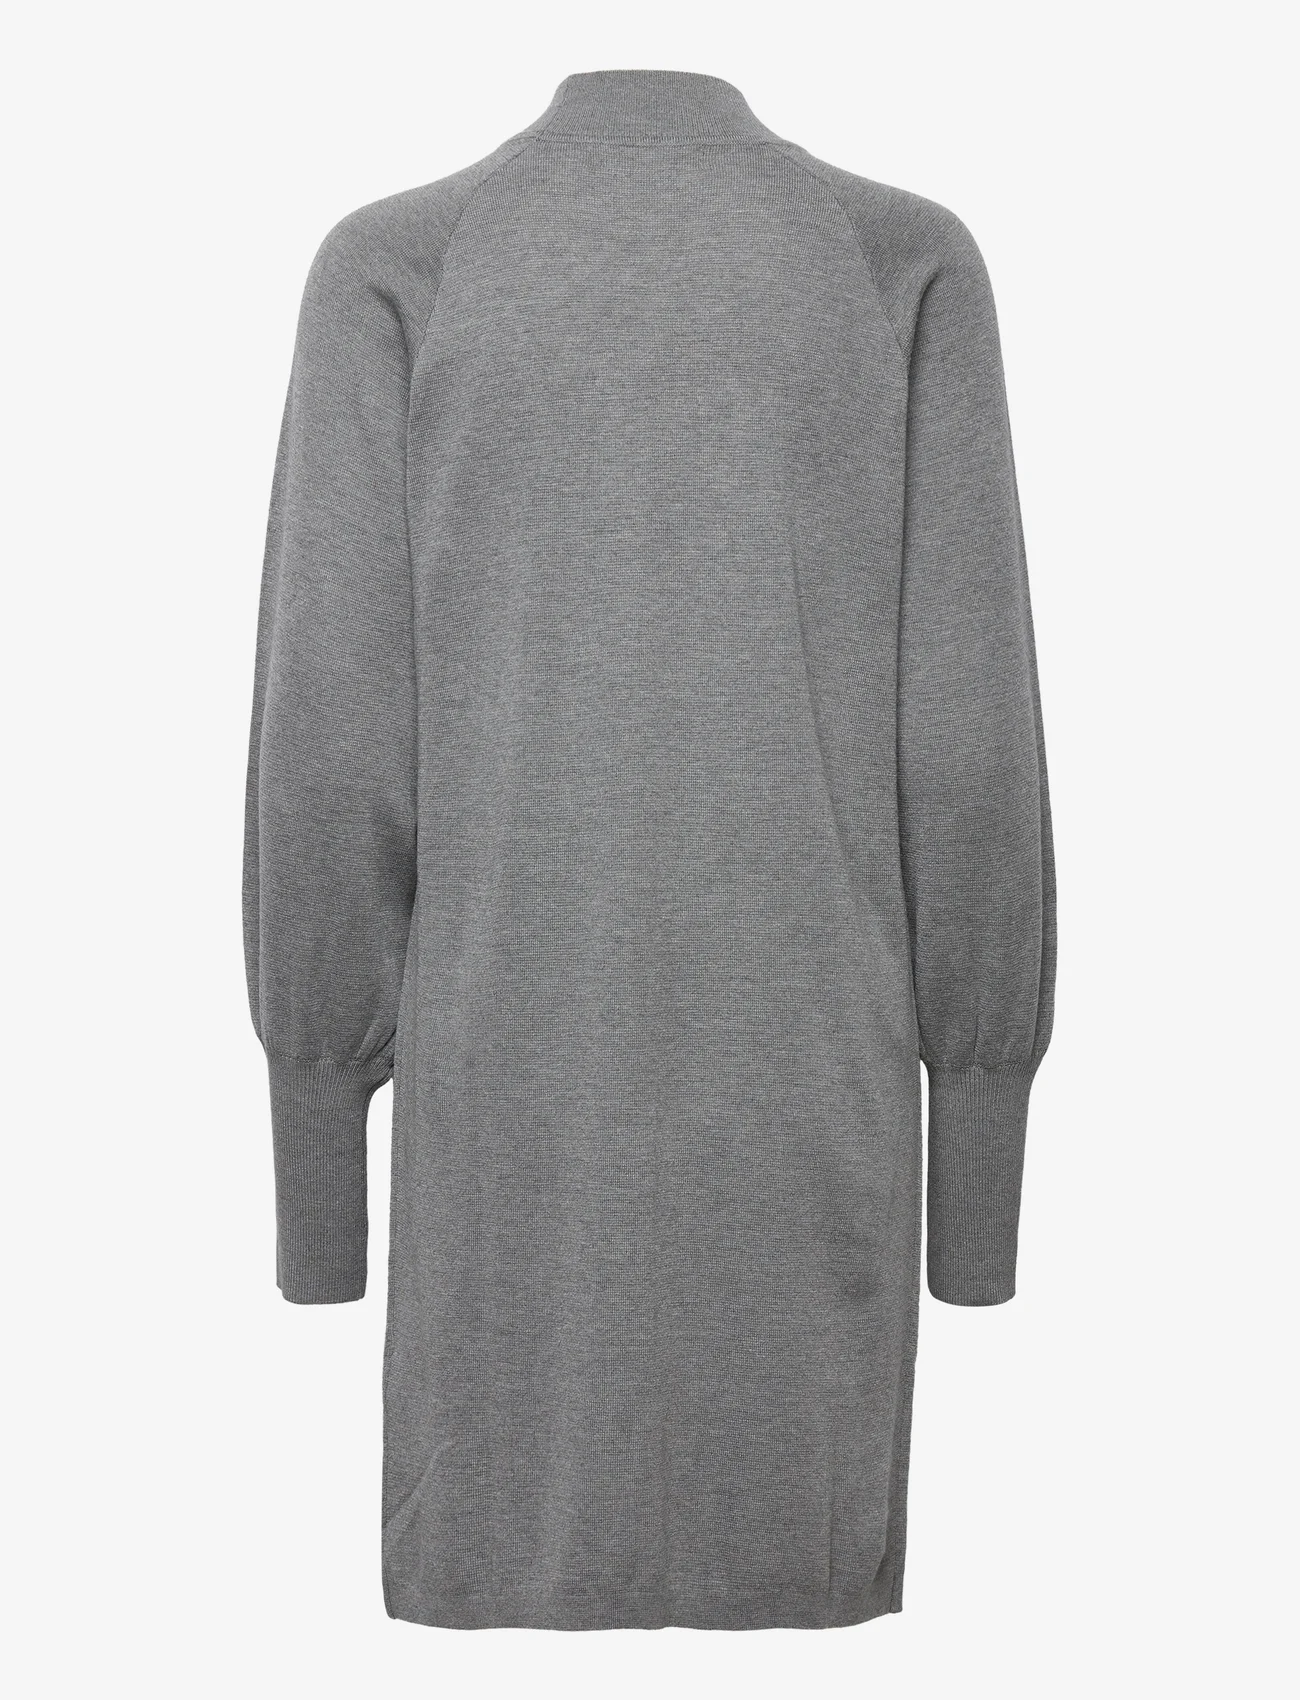 InWear - SanjaIW Dress - strickkleider - medium grey melange - 1